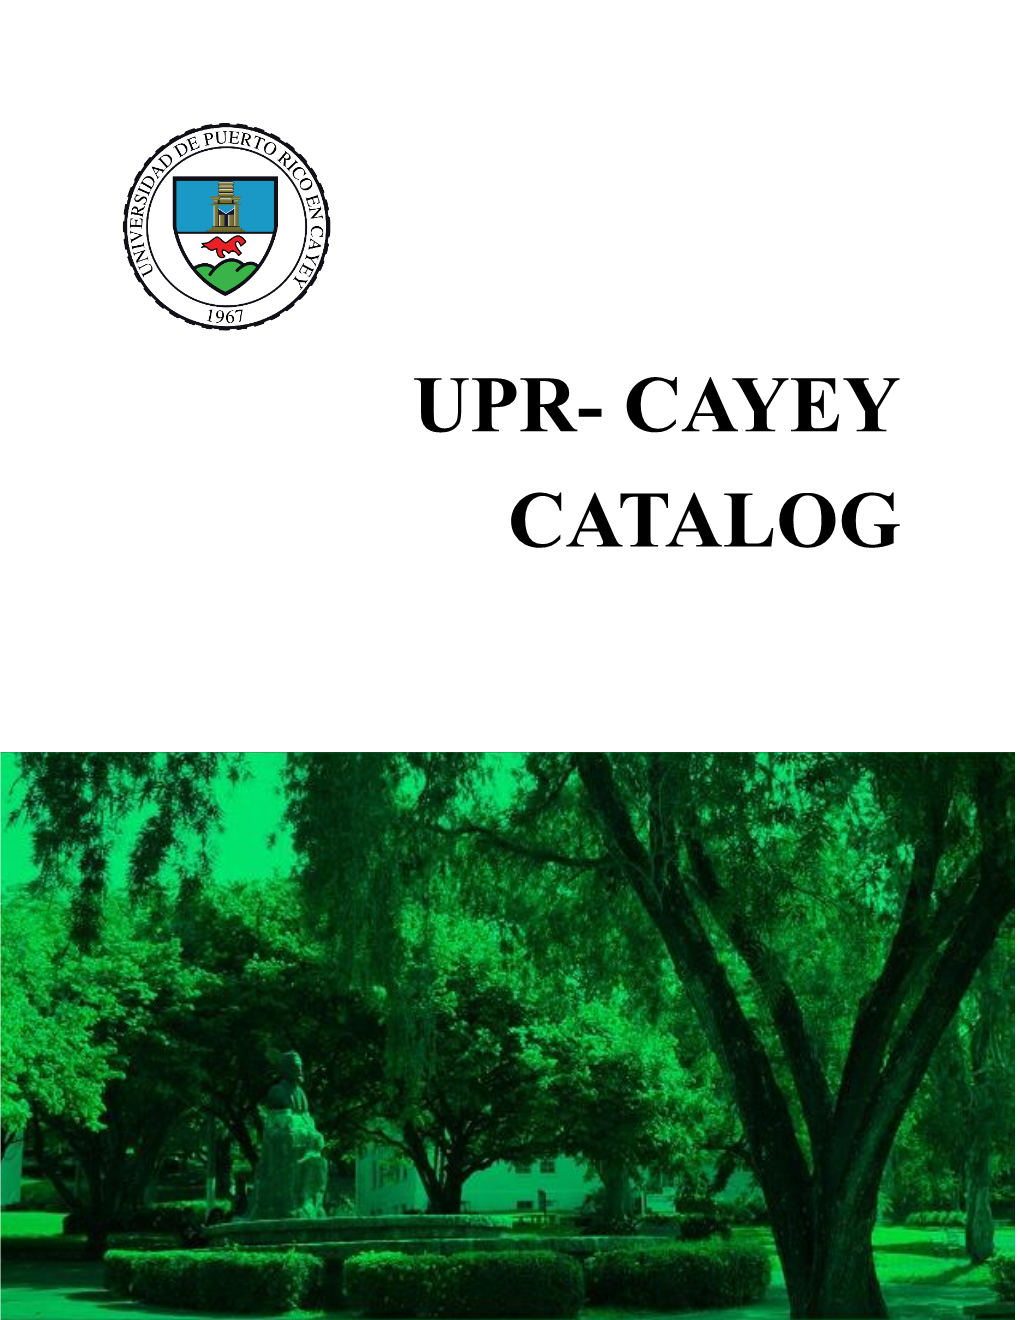 UPR Cayey Catalog